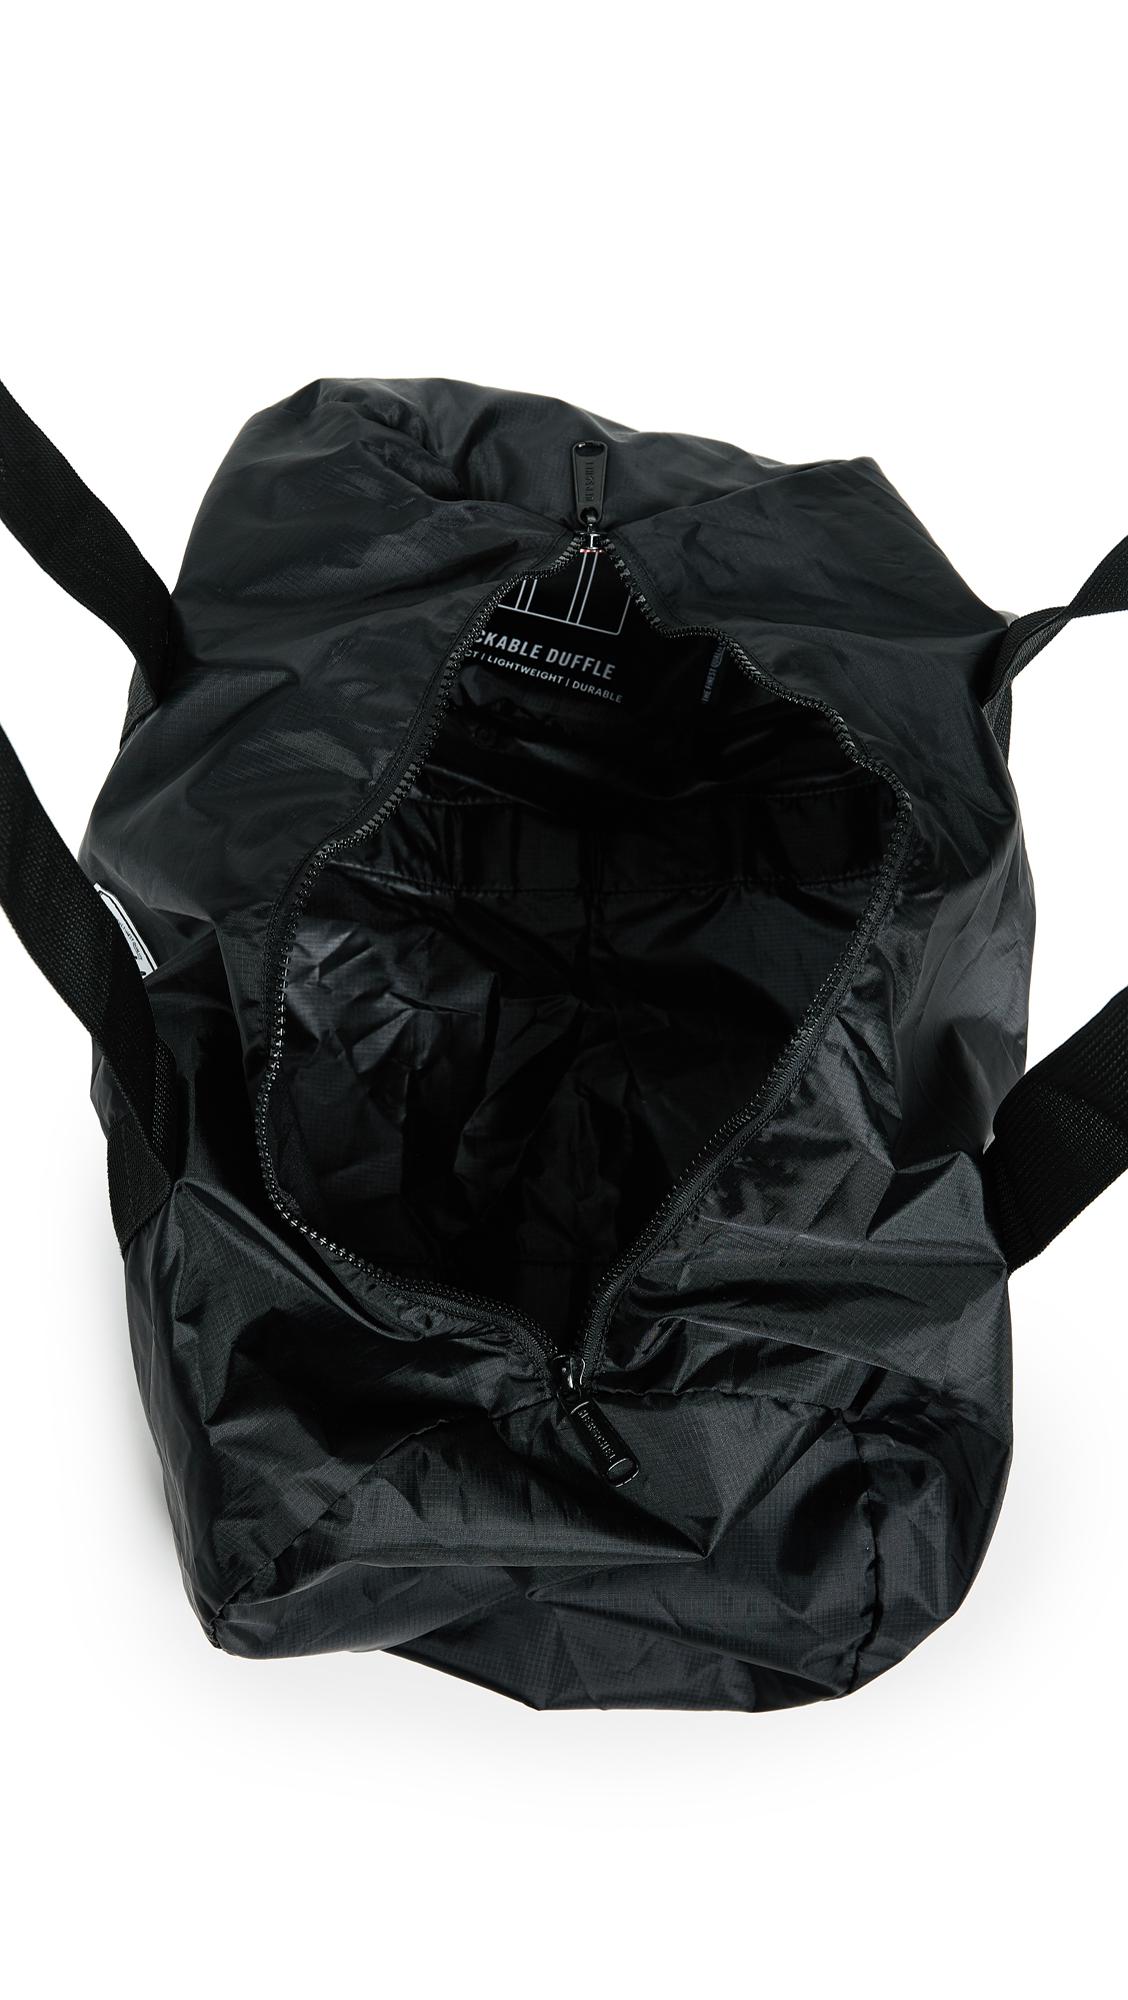 Herschel Supply Co. Black Packable Duffle Bag for Men - Lyst